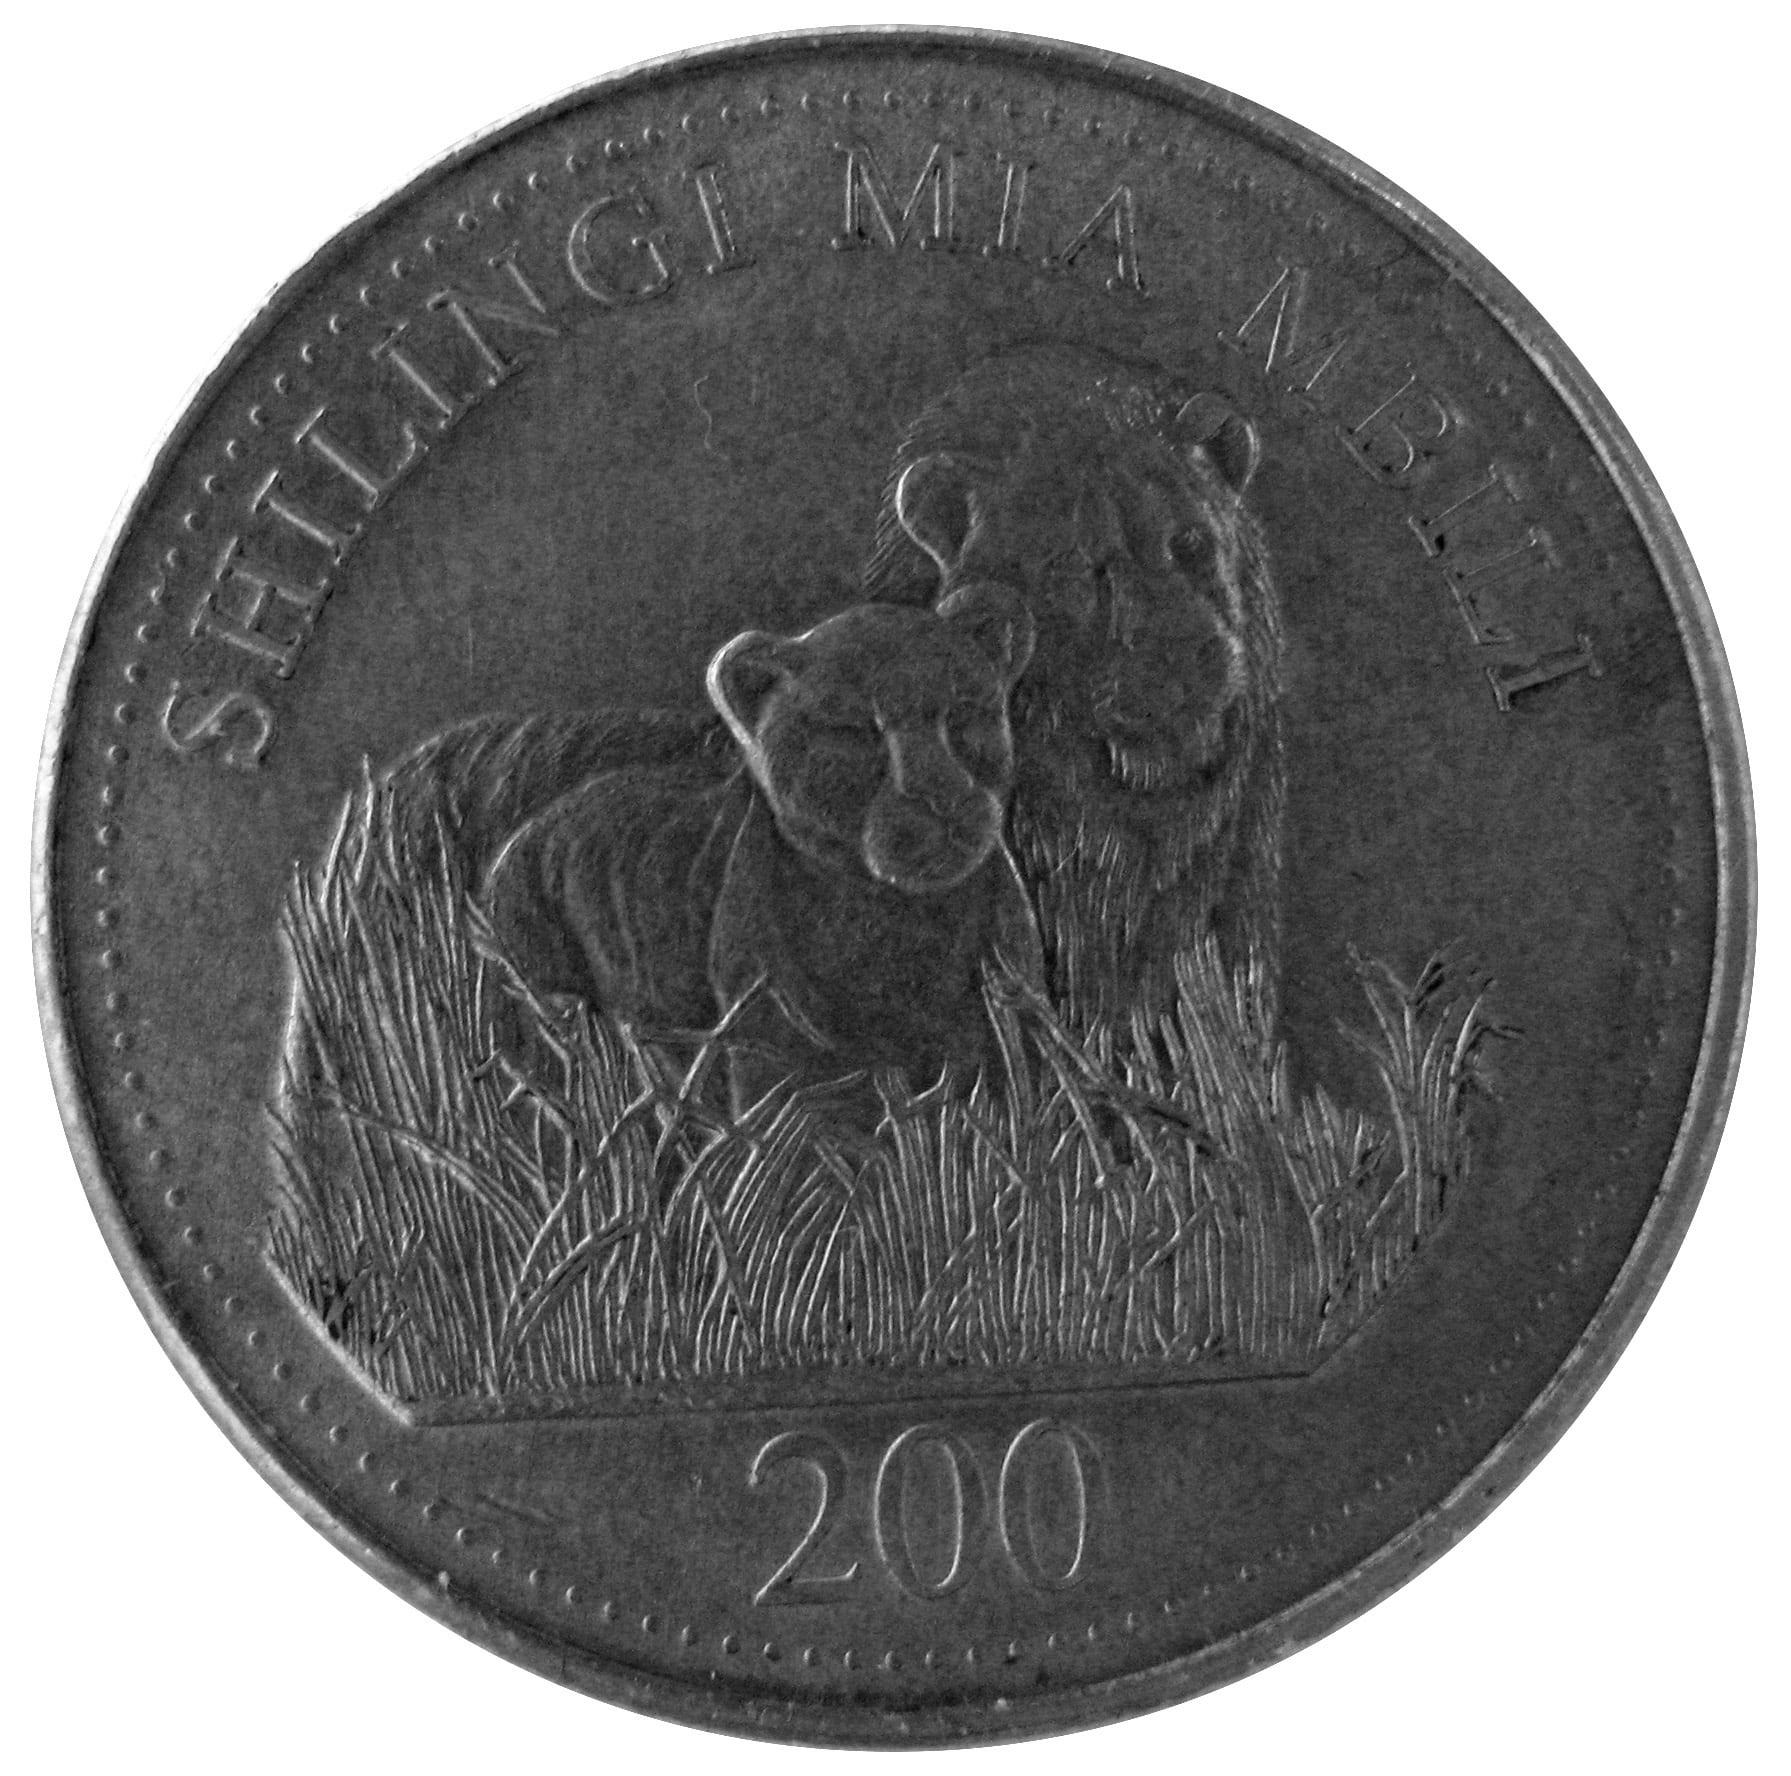 Tanzania 200 shilling coin